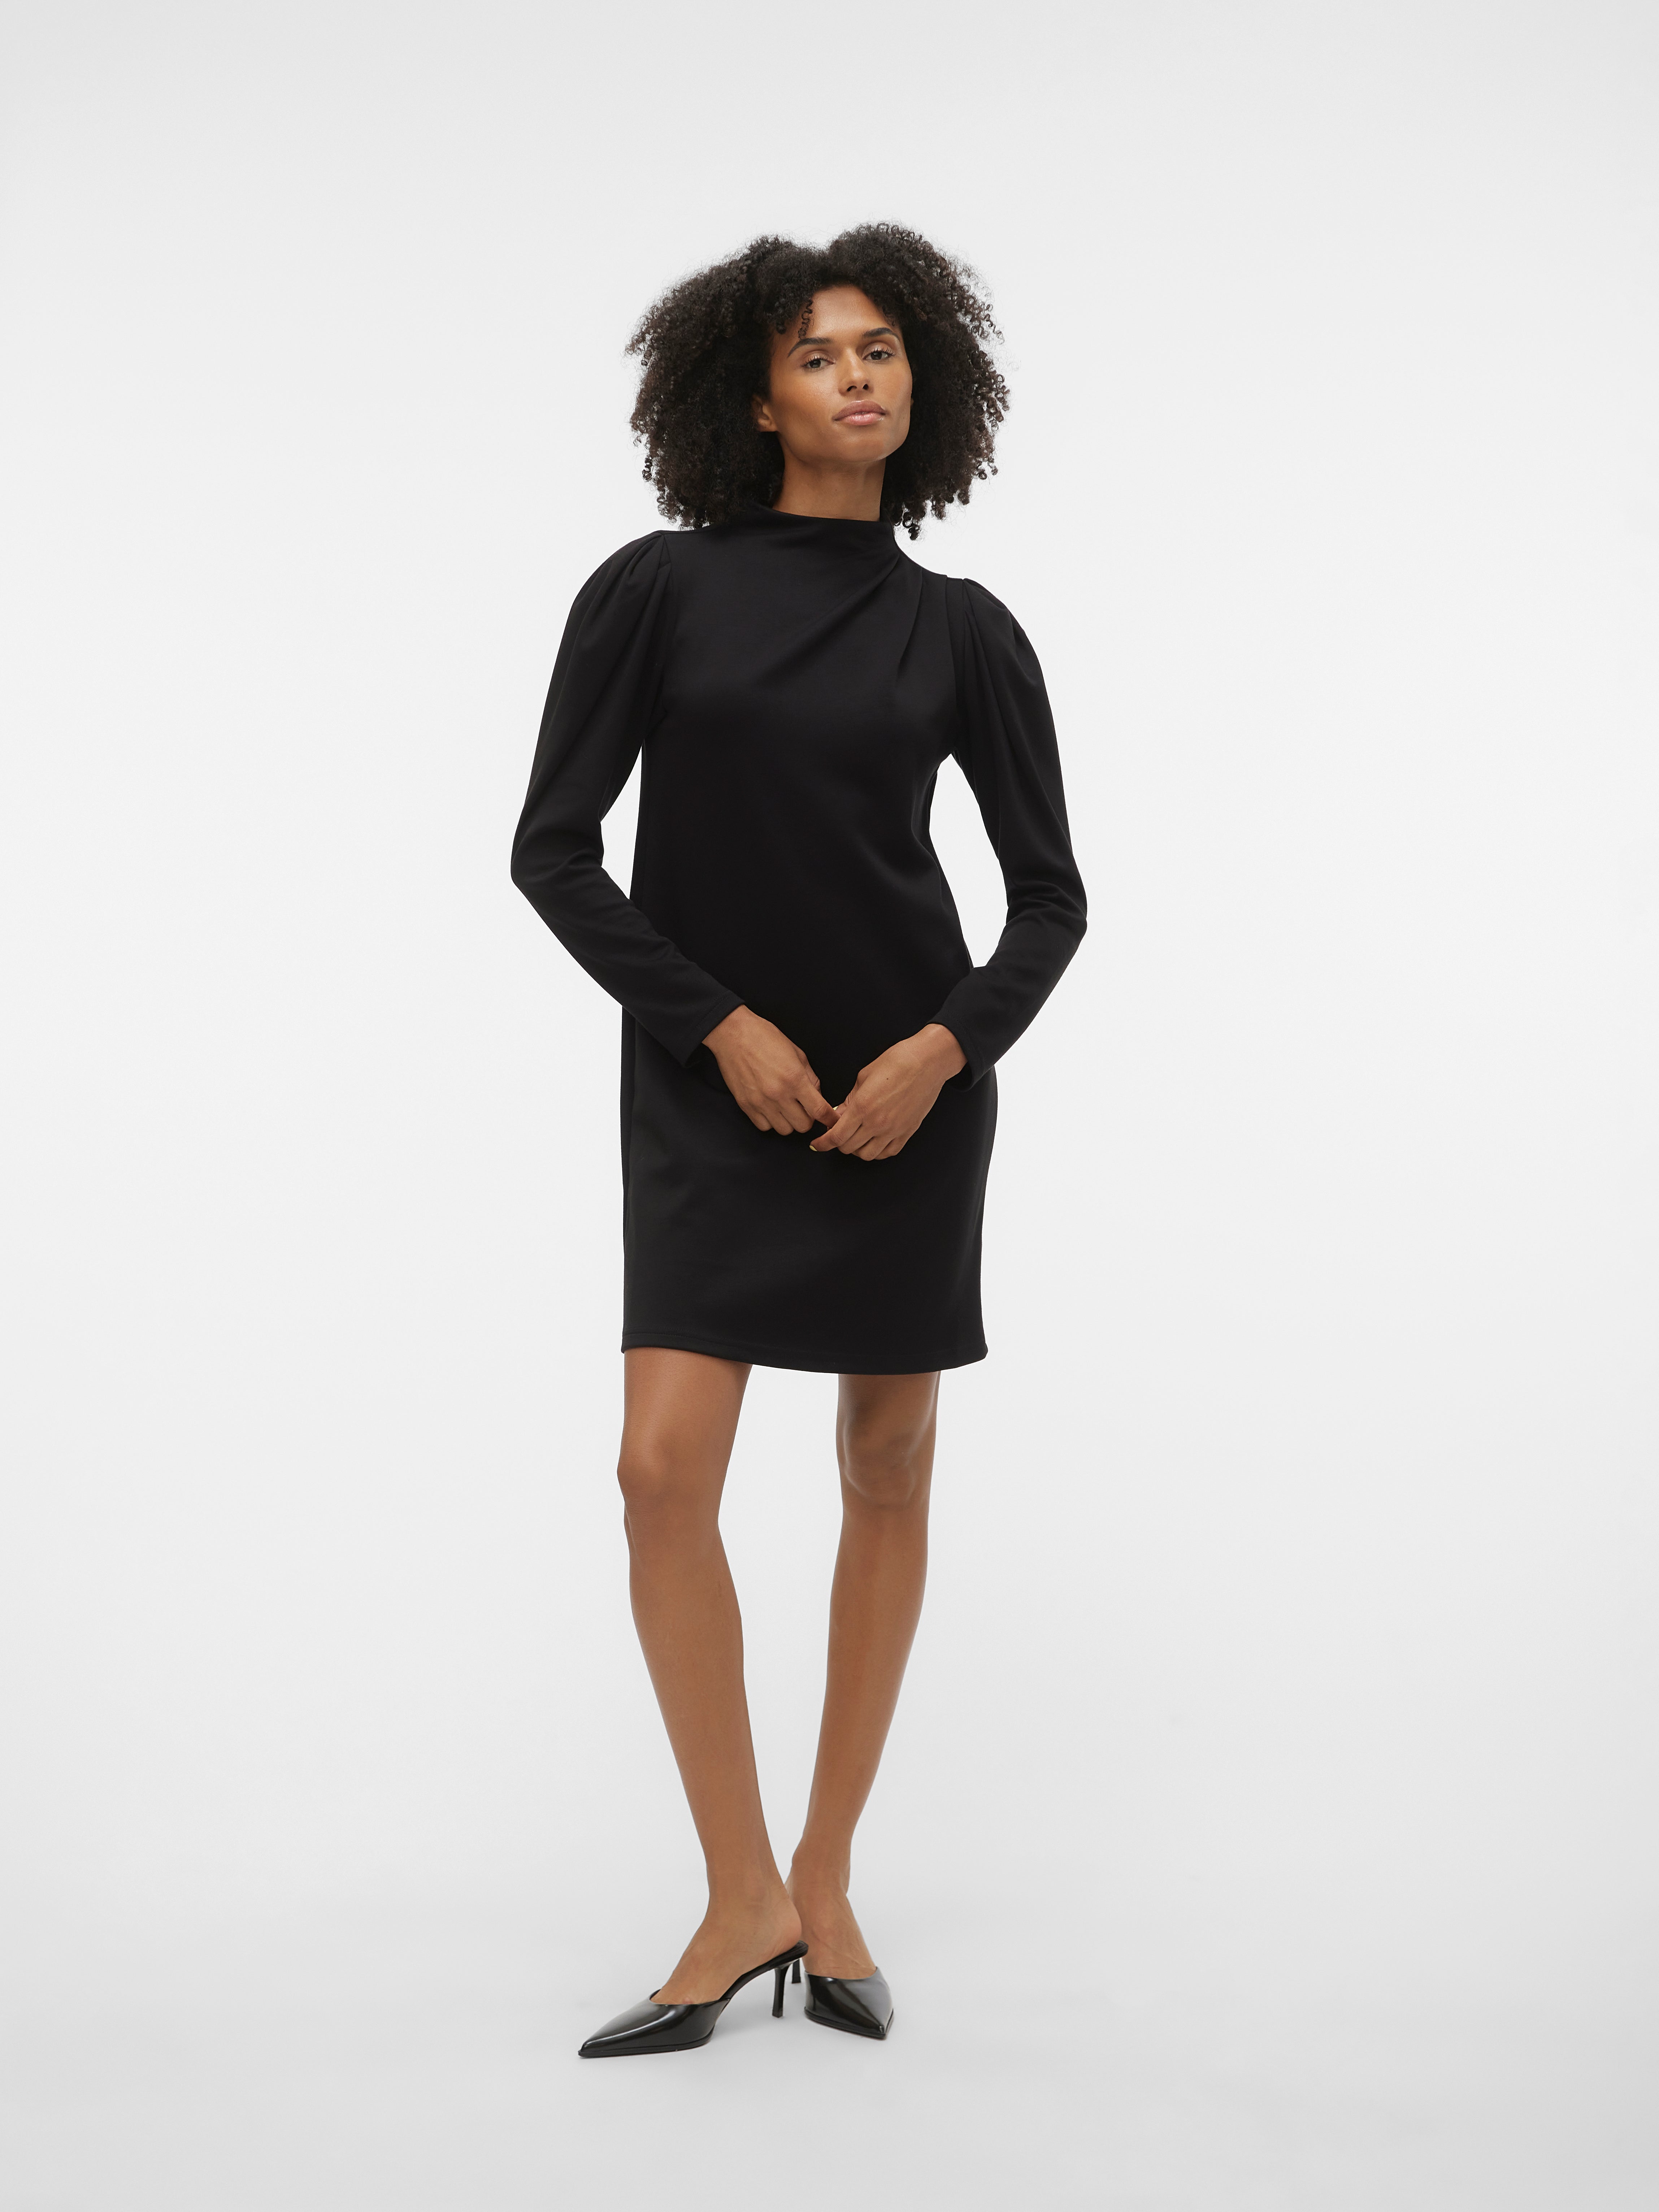 VERO MODA Nina Puff Sleeve Knee Length Black Dress Small | Black knee  length dress, Casual summer dresses, Clothes design